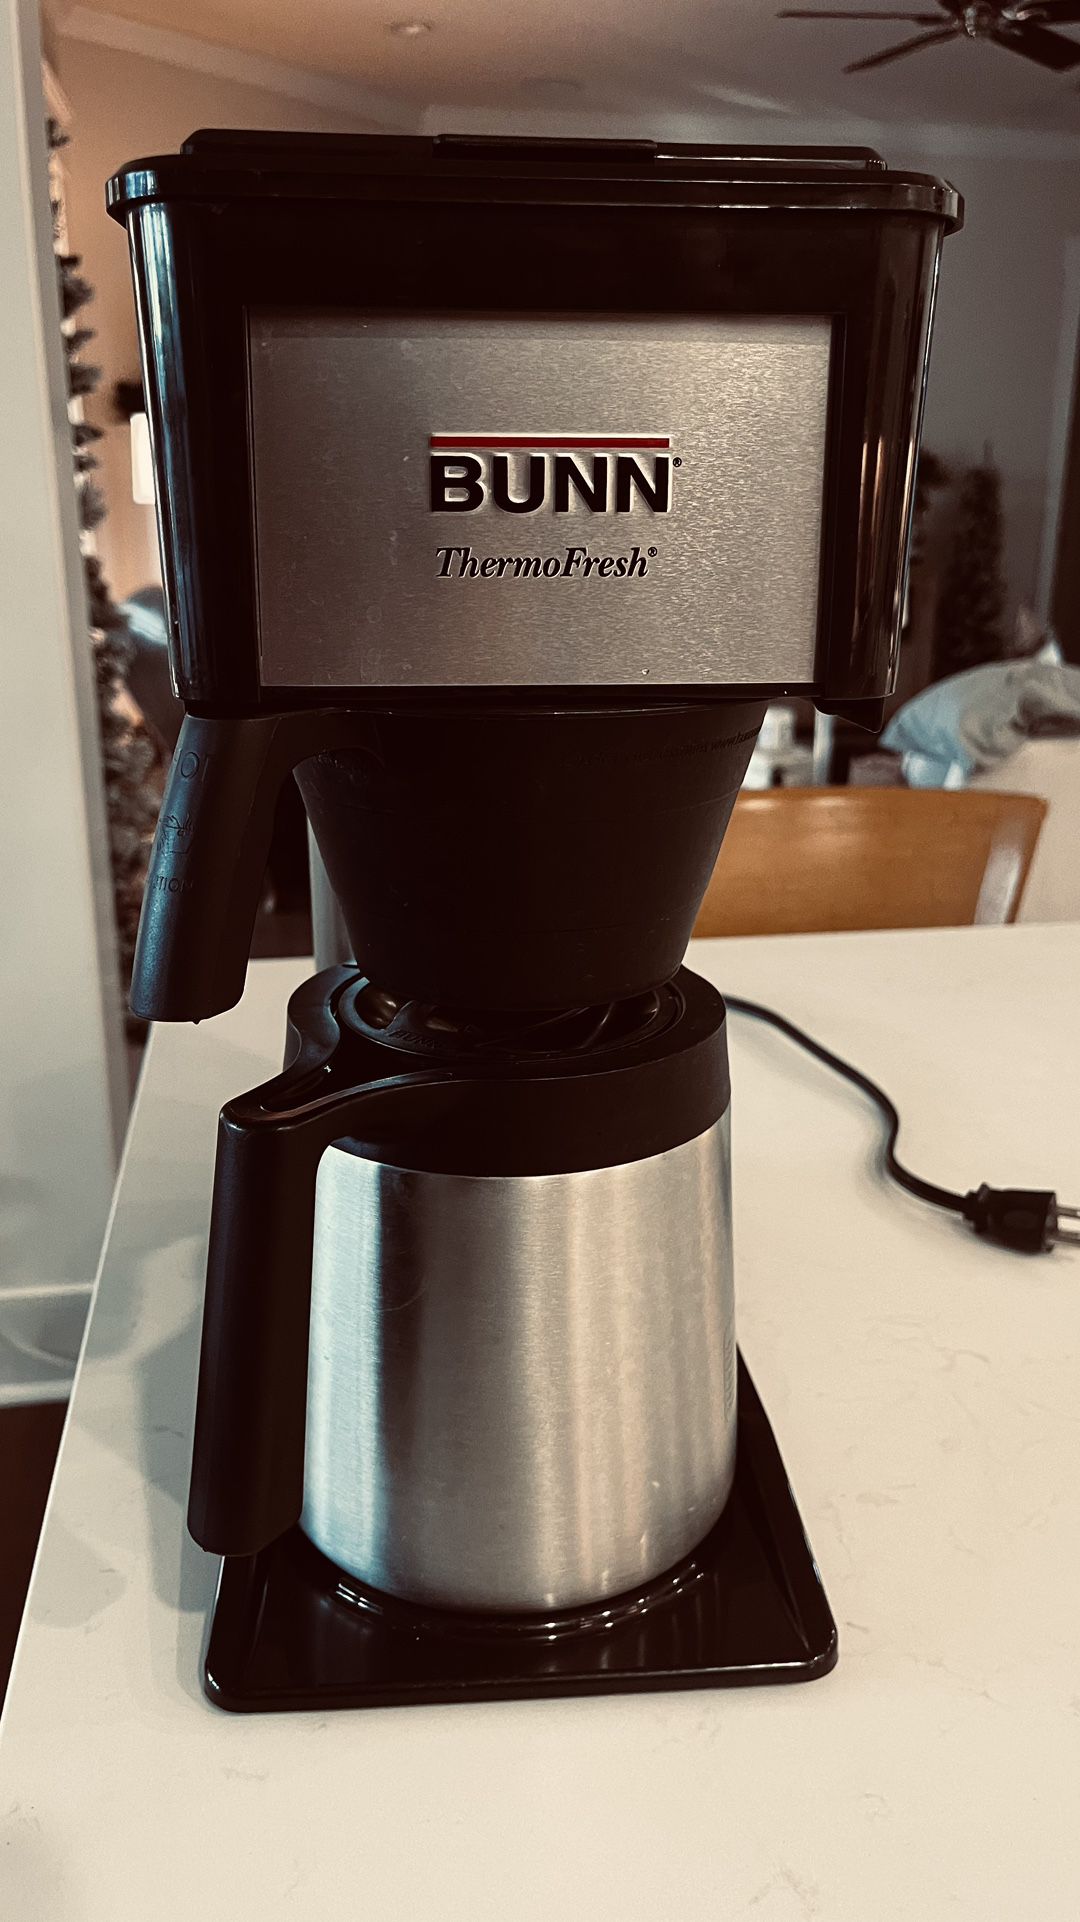 Bunn Thermofresh Coffee Maker